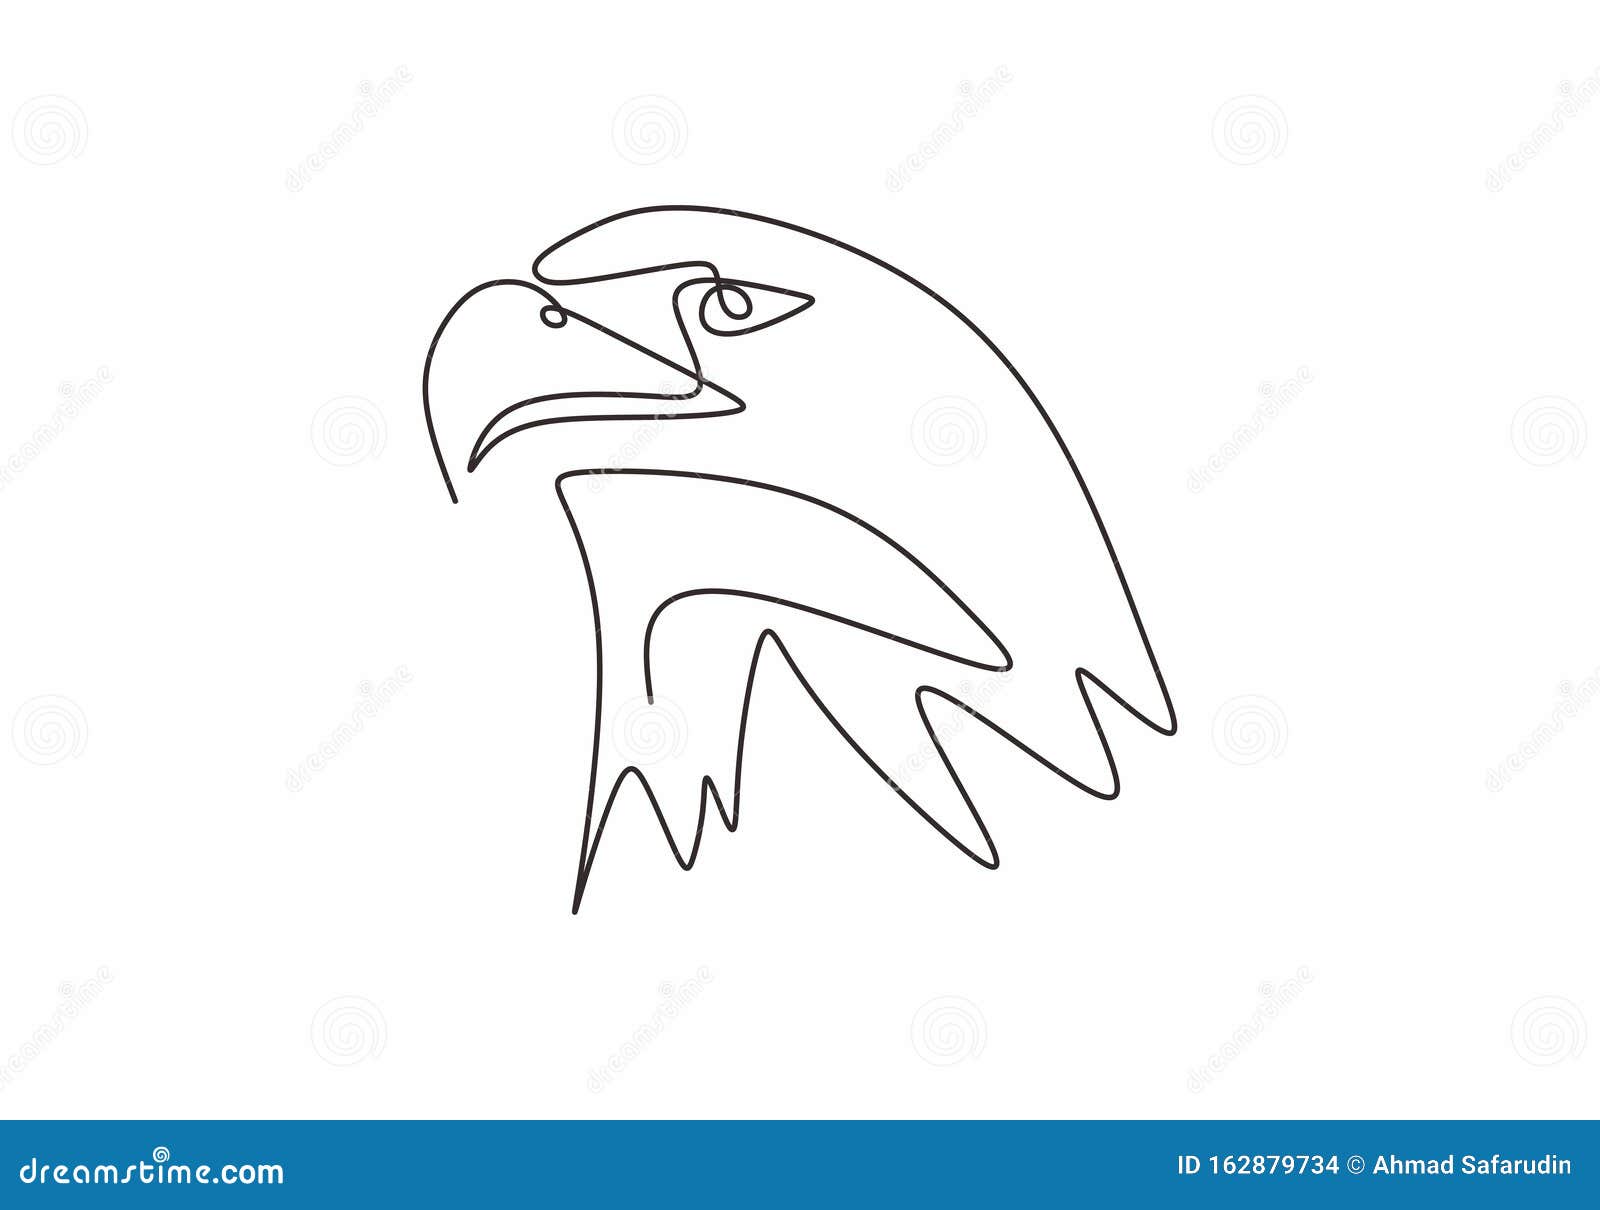 210 Drawing Of American Eagle Tattoo Designs Illustrations RoyaltyFree  Vector Graphics  Clip Art  iStock